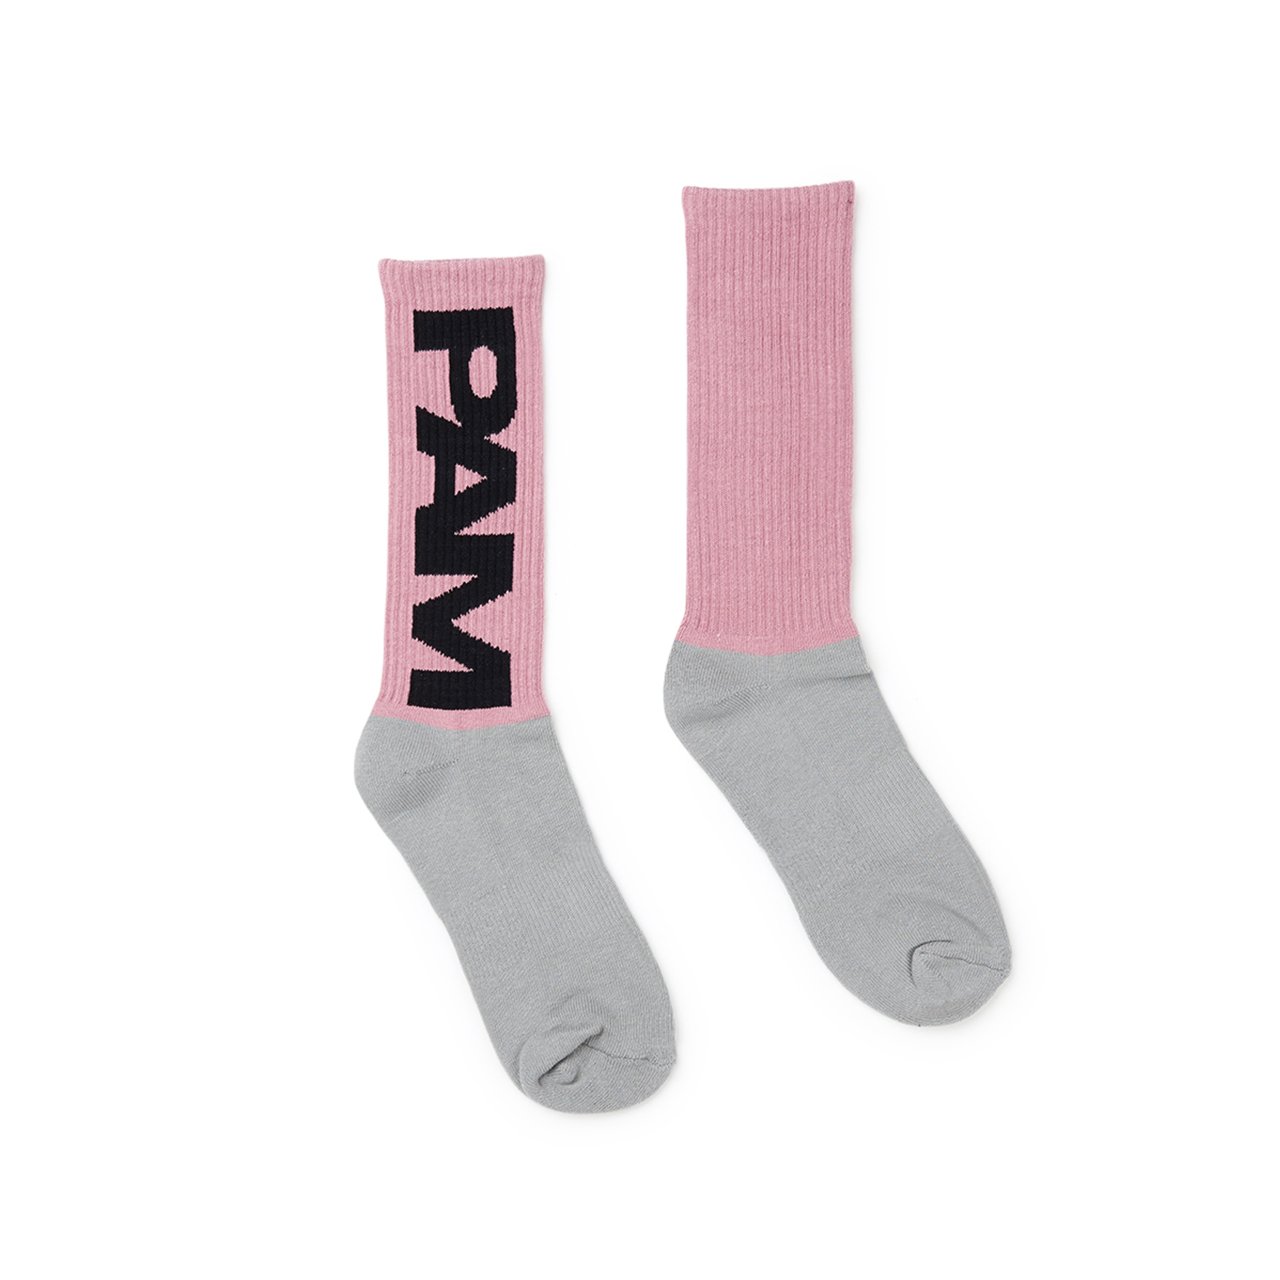 perks and mini b.t.c. socks (pink / grey) - 9705-fsgy - a.plus - Image - 1